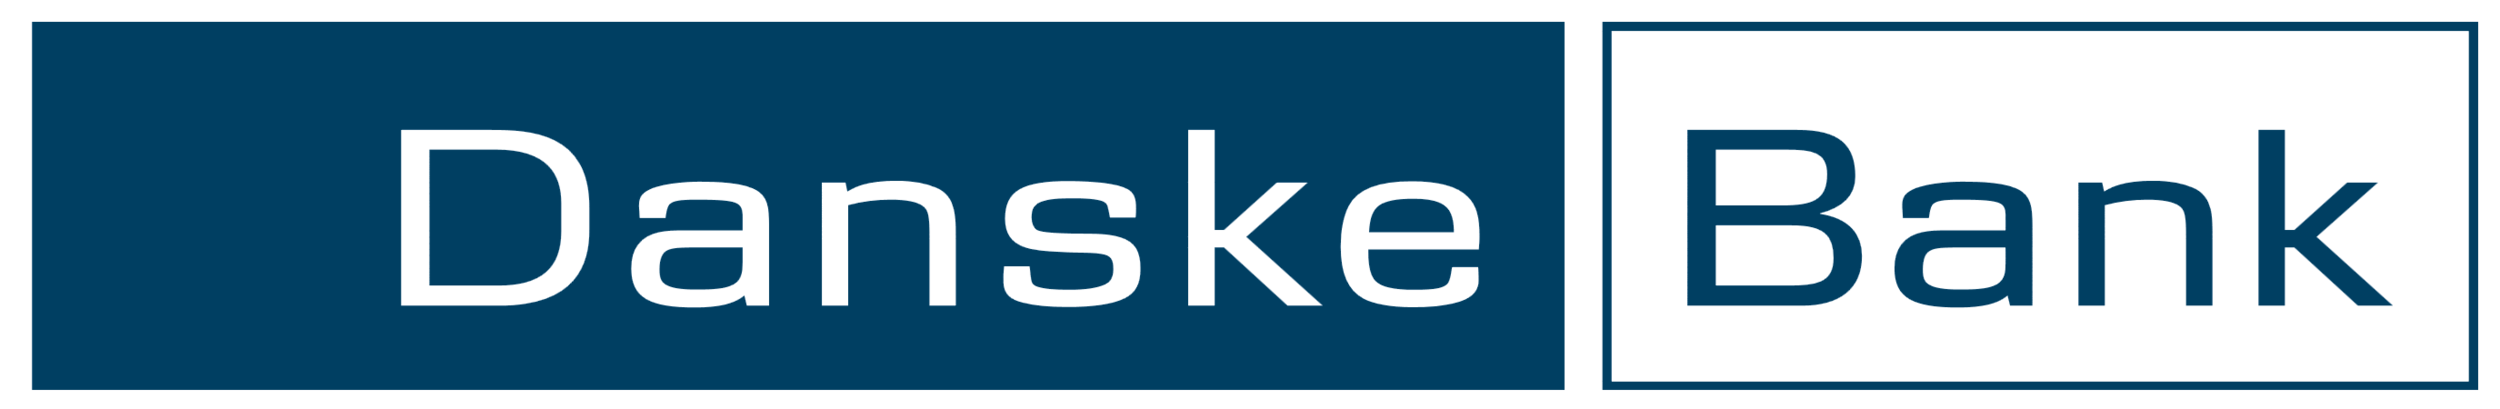 danske-bank-logo-photos.png